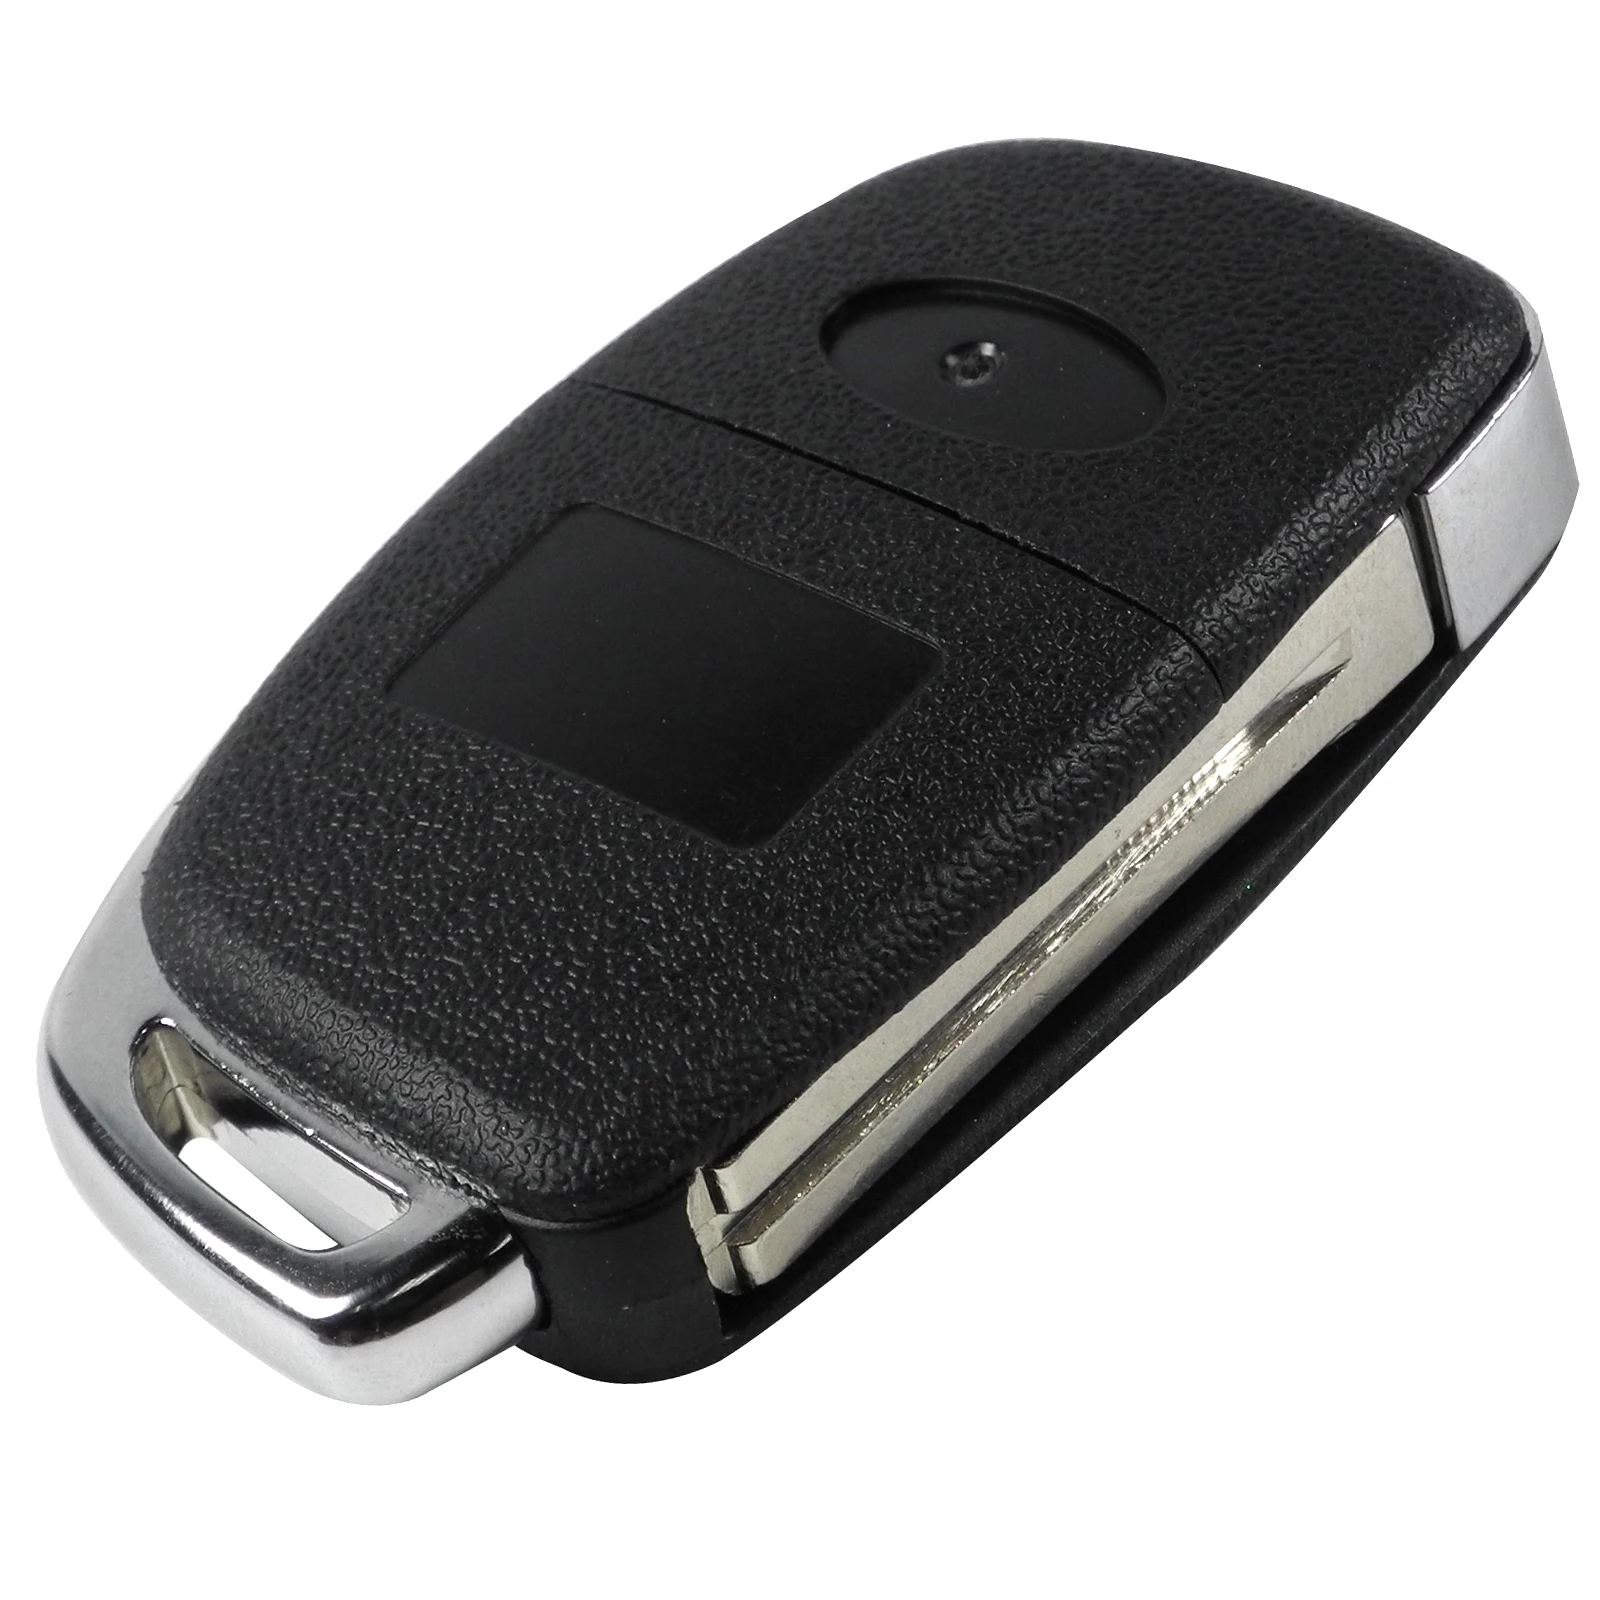 Jingyuqin 3B 433 МГц с id46 Автомобильный ключ плата управления для Hyundai Solaris Accent Tucson l10 l20 l30